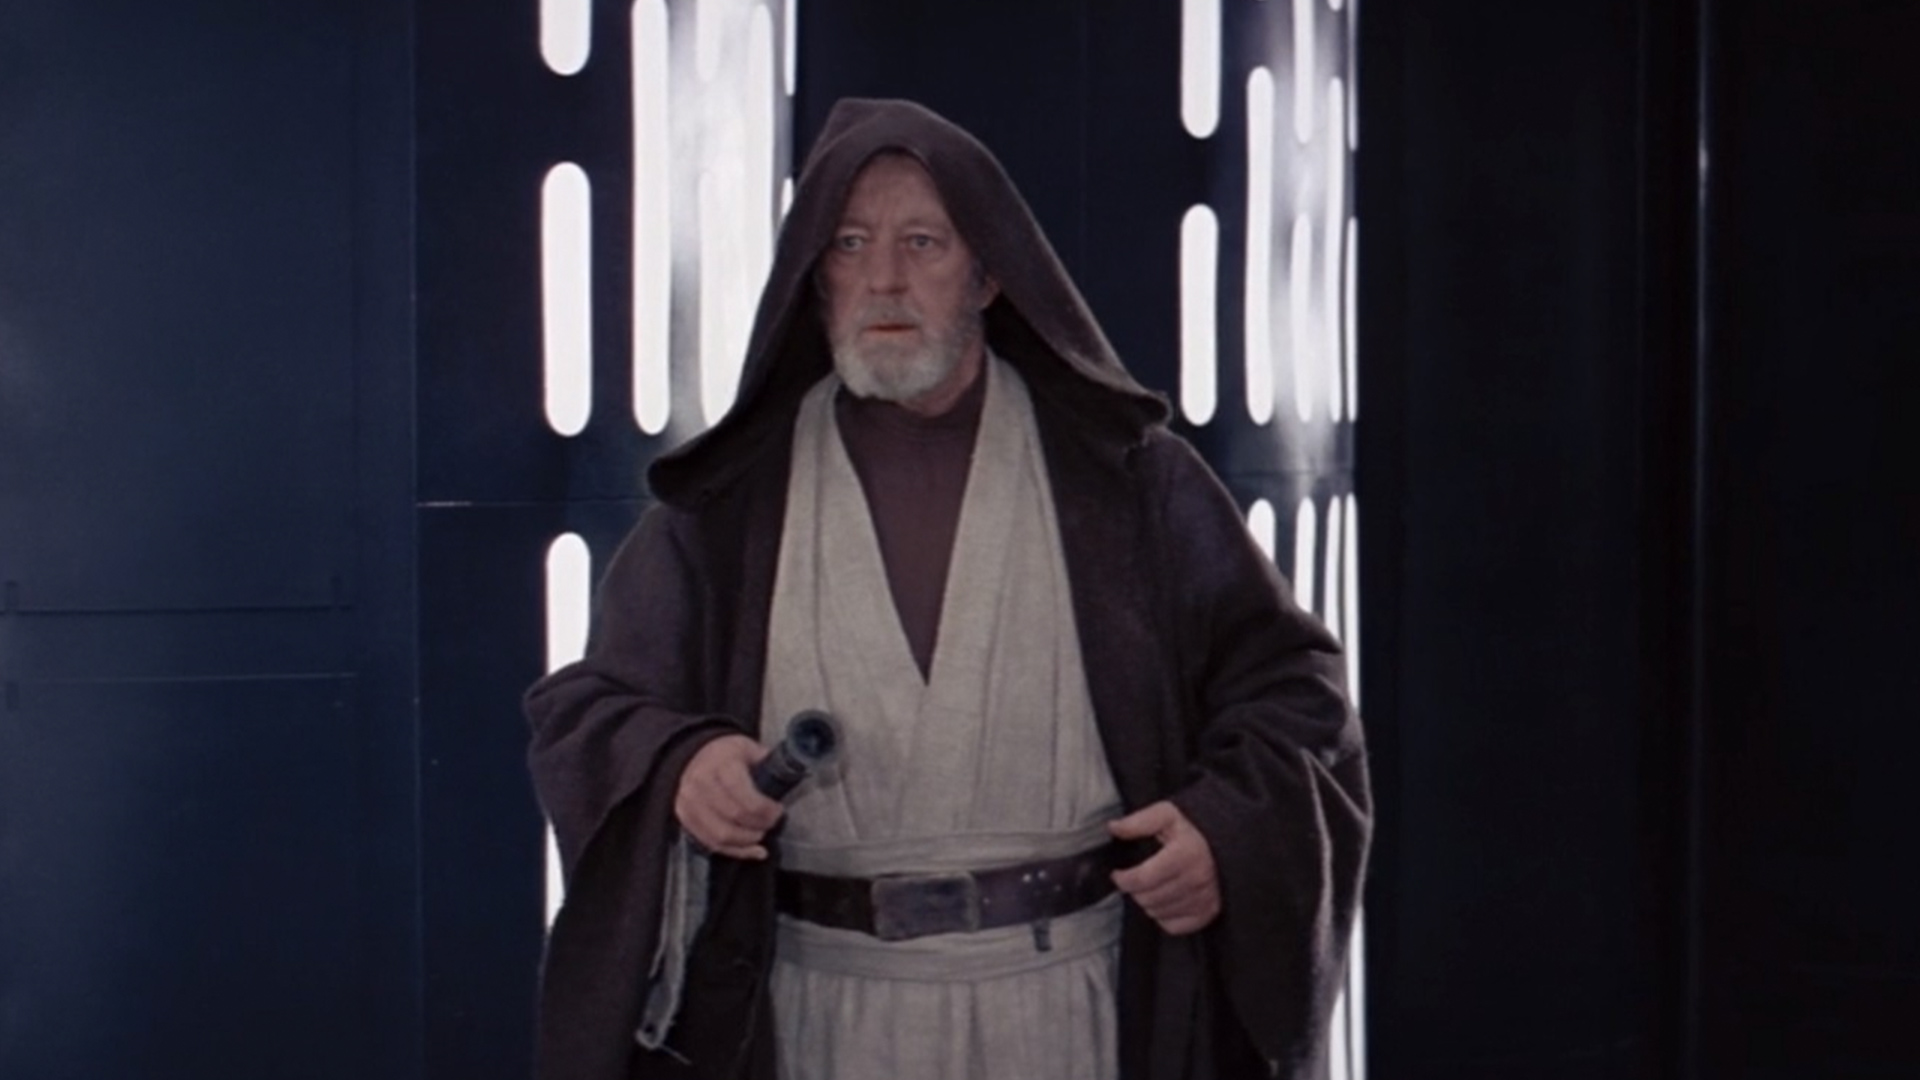 Obi Wan Kenobi from Star Wars in his jedi robes holding a lightsaber